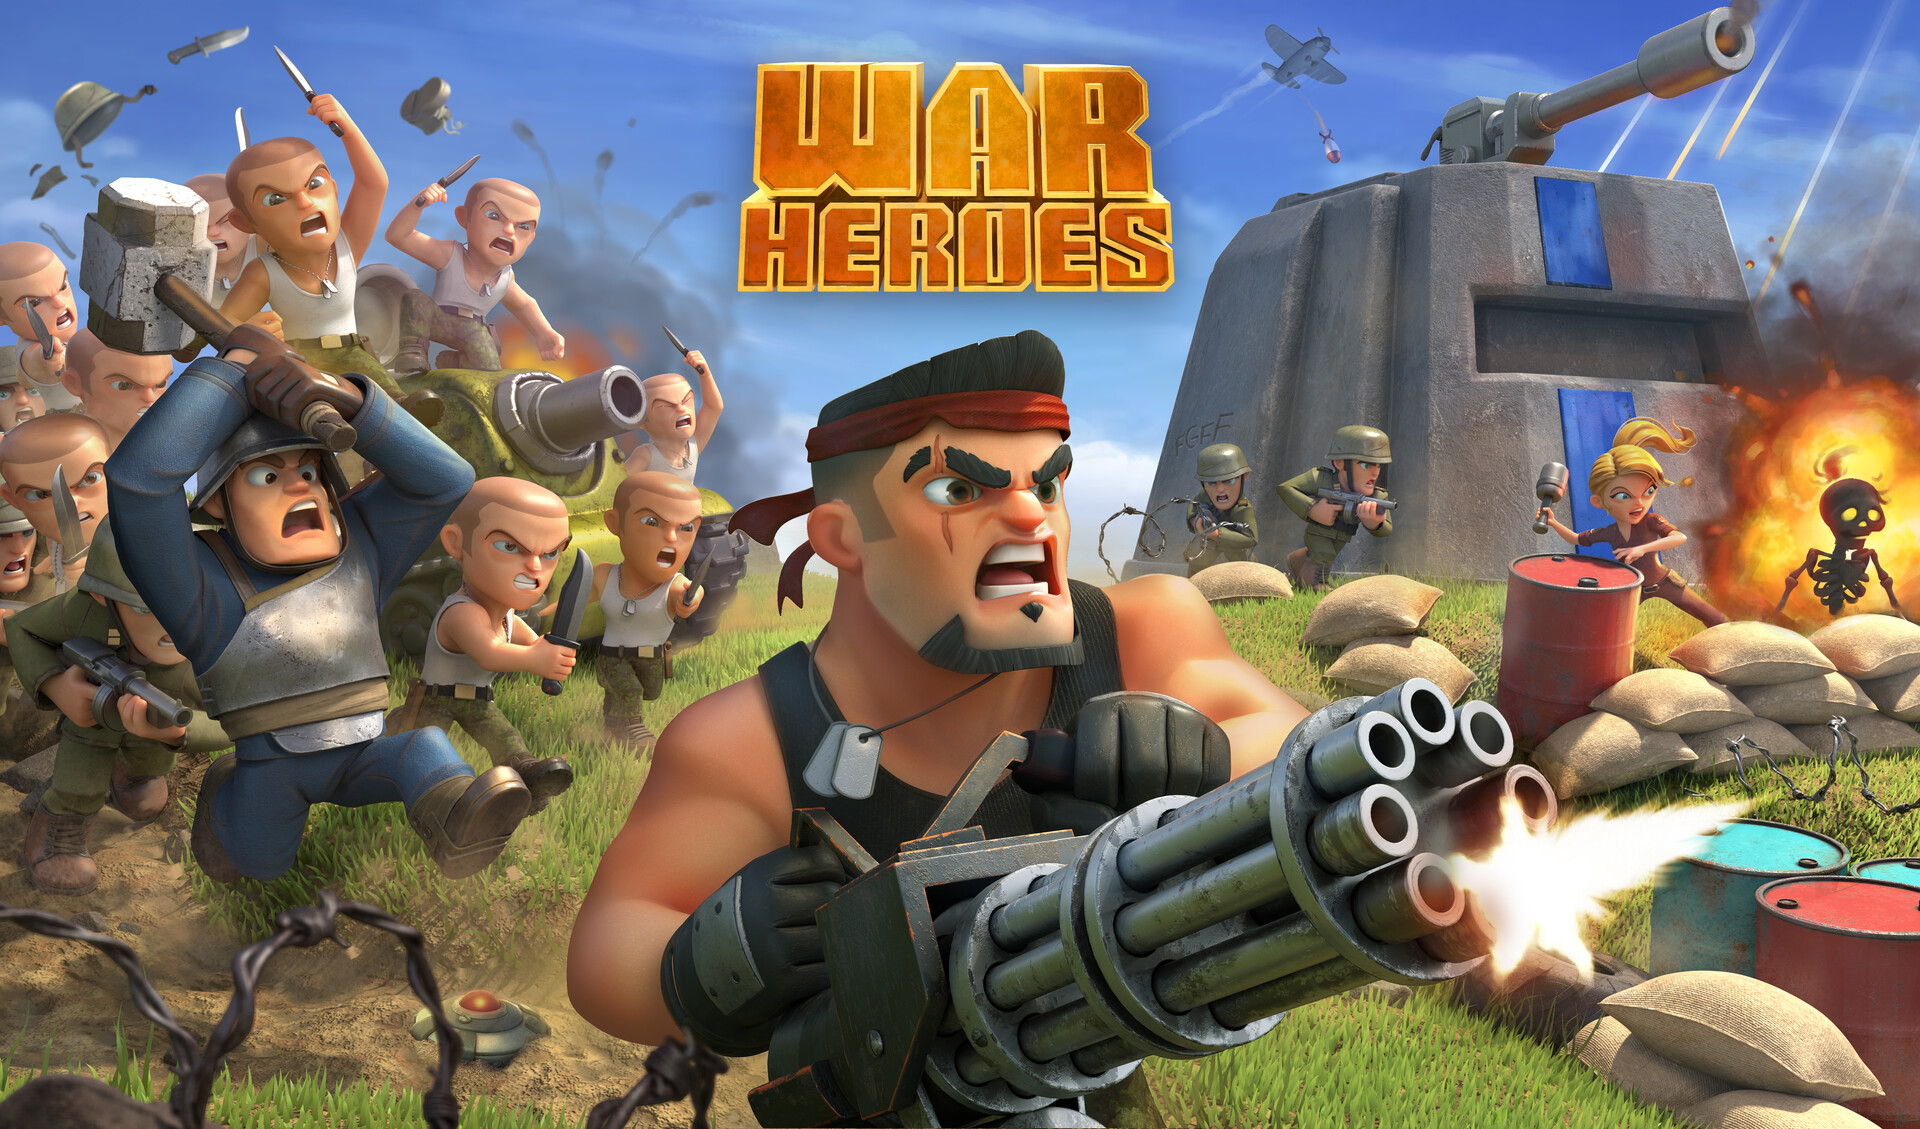 Hero wars game